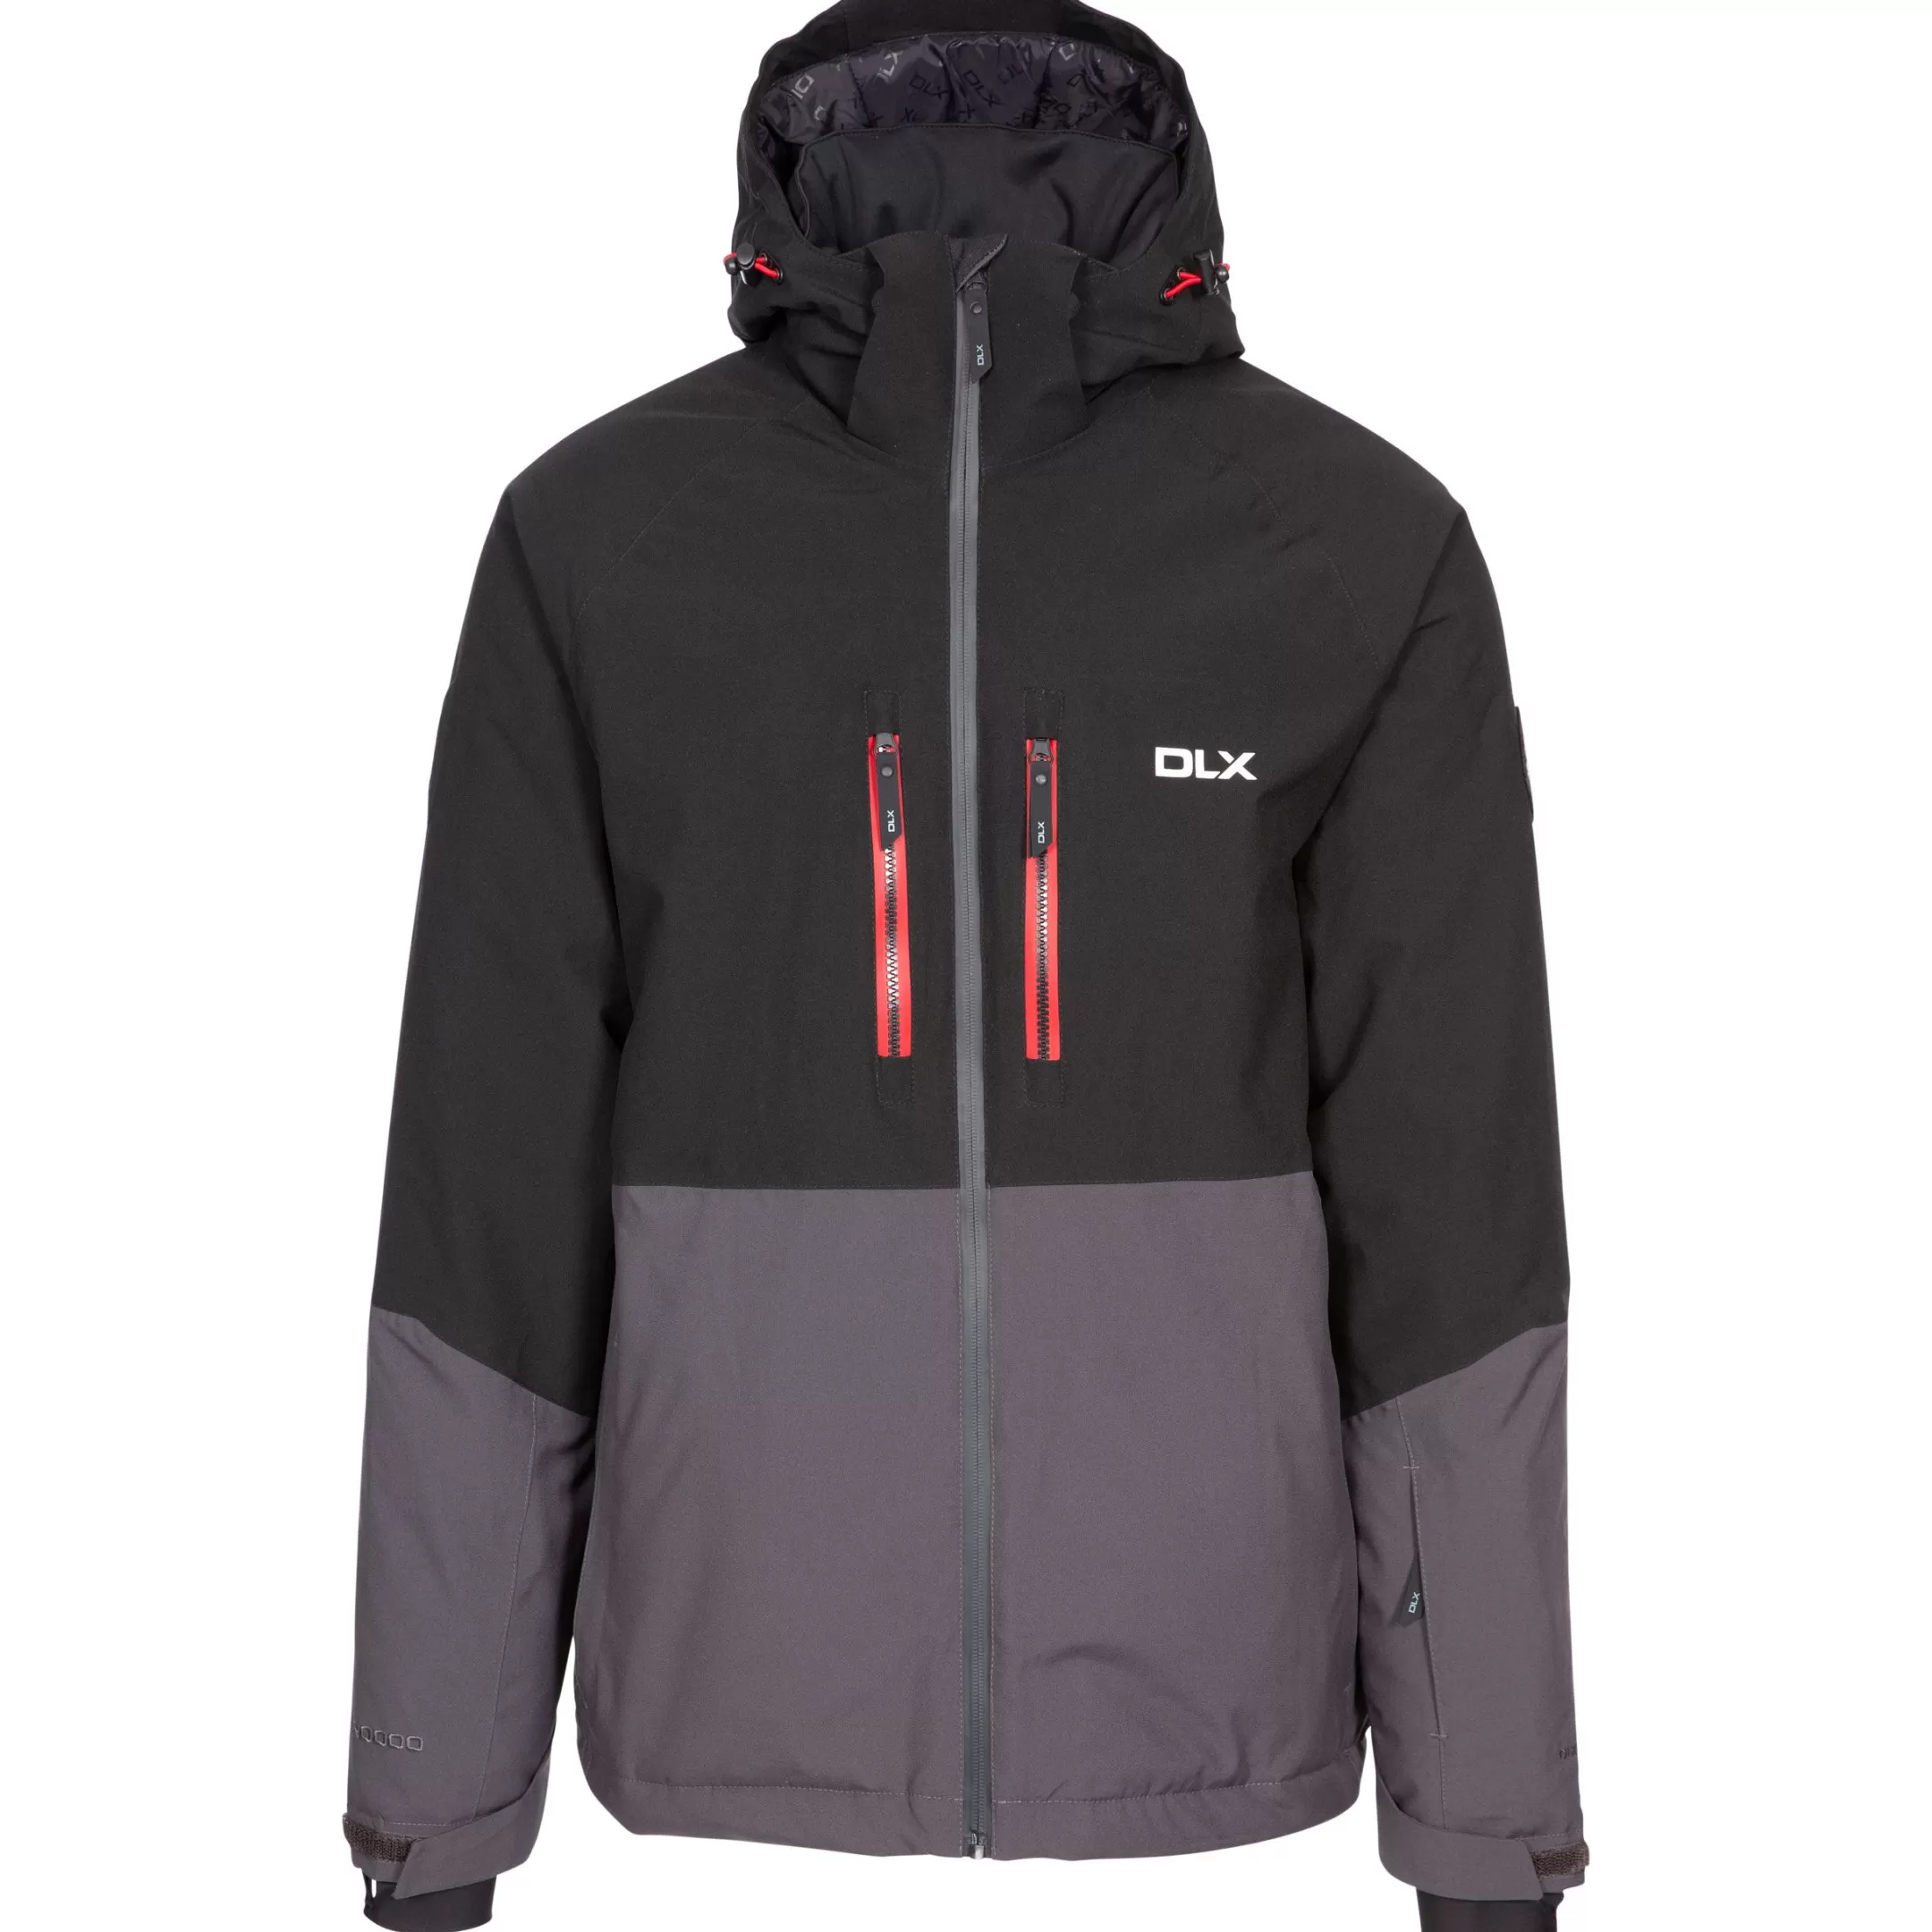 DLX Mens Ski Jacket with RECCO Nelson | Trespass Discount